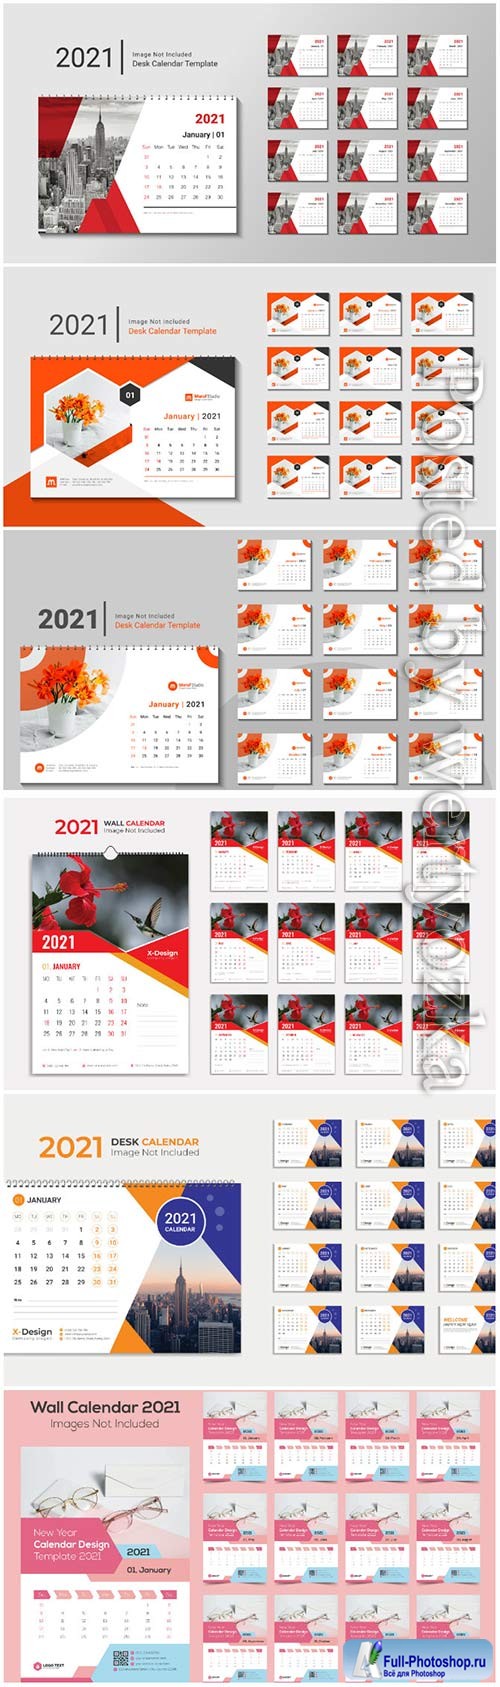 Desk calendar 2021 template design for new year vol 2